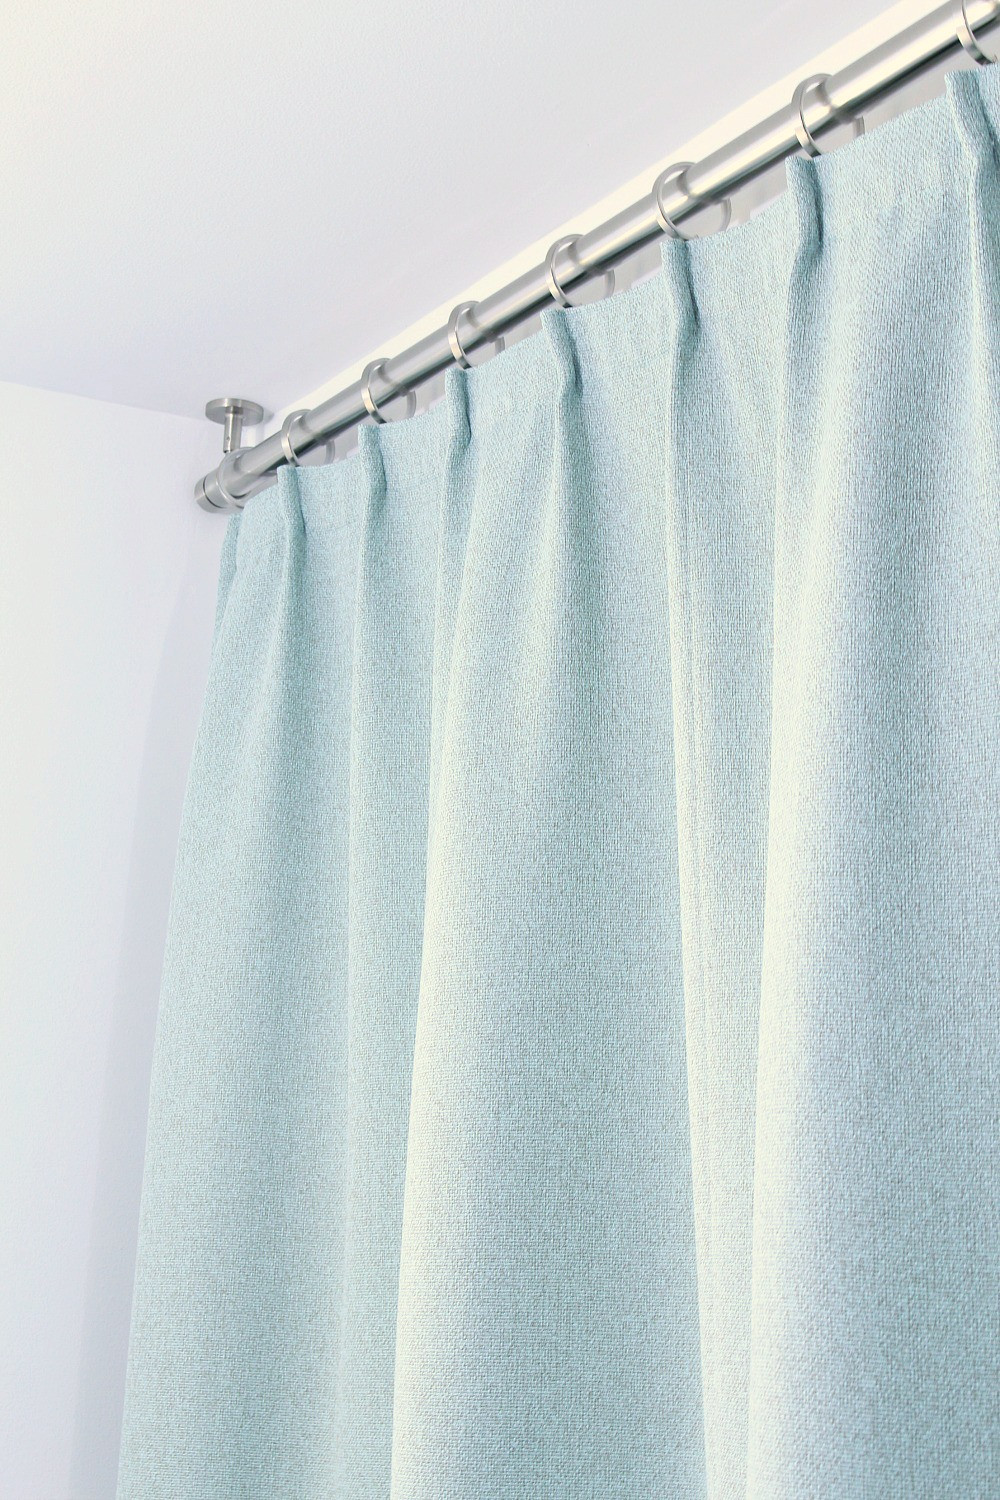 Bathroom Shower Curtain Rods
 Bathroom Update Ceiling Mounted Shower Curtain Rod